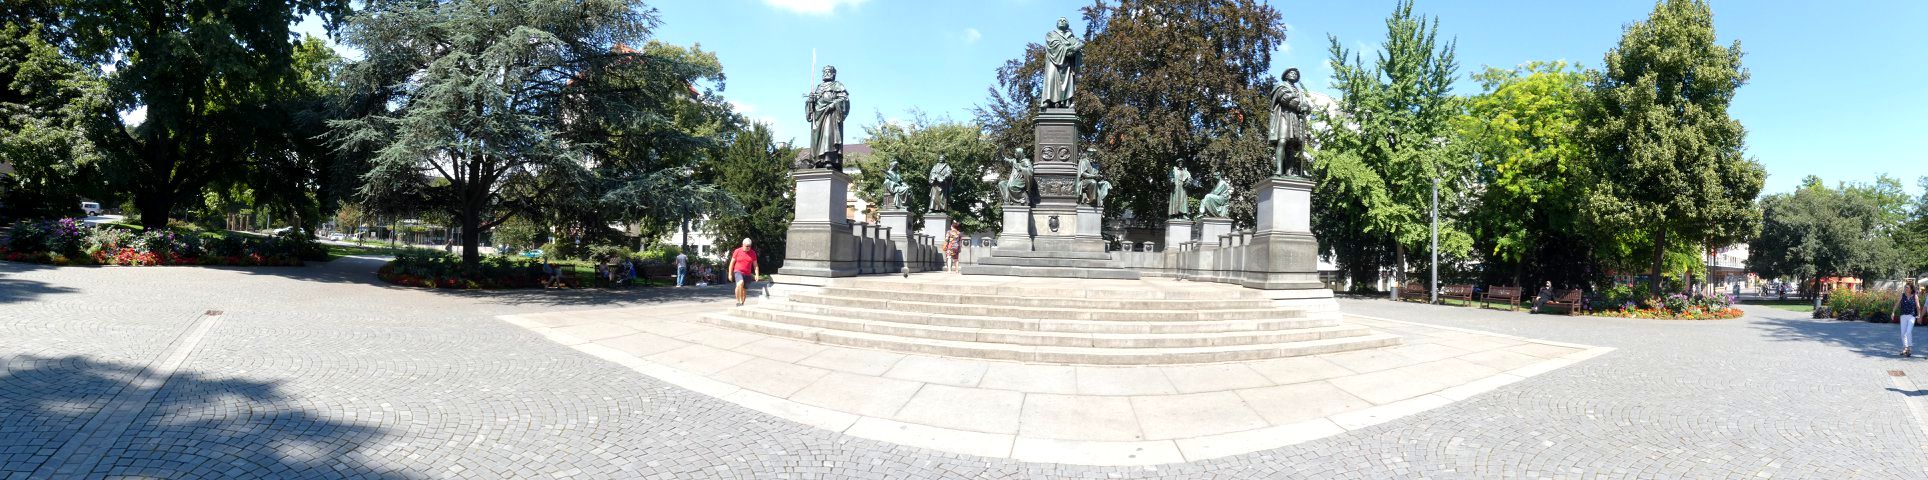 Weltreformationsdenkmal | Lutherdenkmal | Worms | 1861 | 150 years old | World Reformatin Monument | E. Rietschel